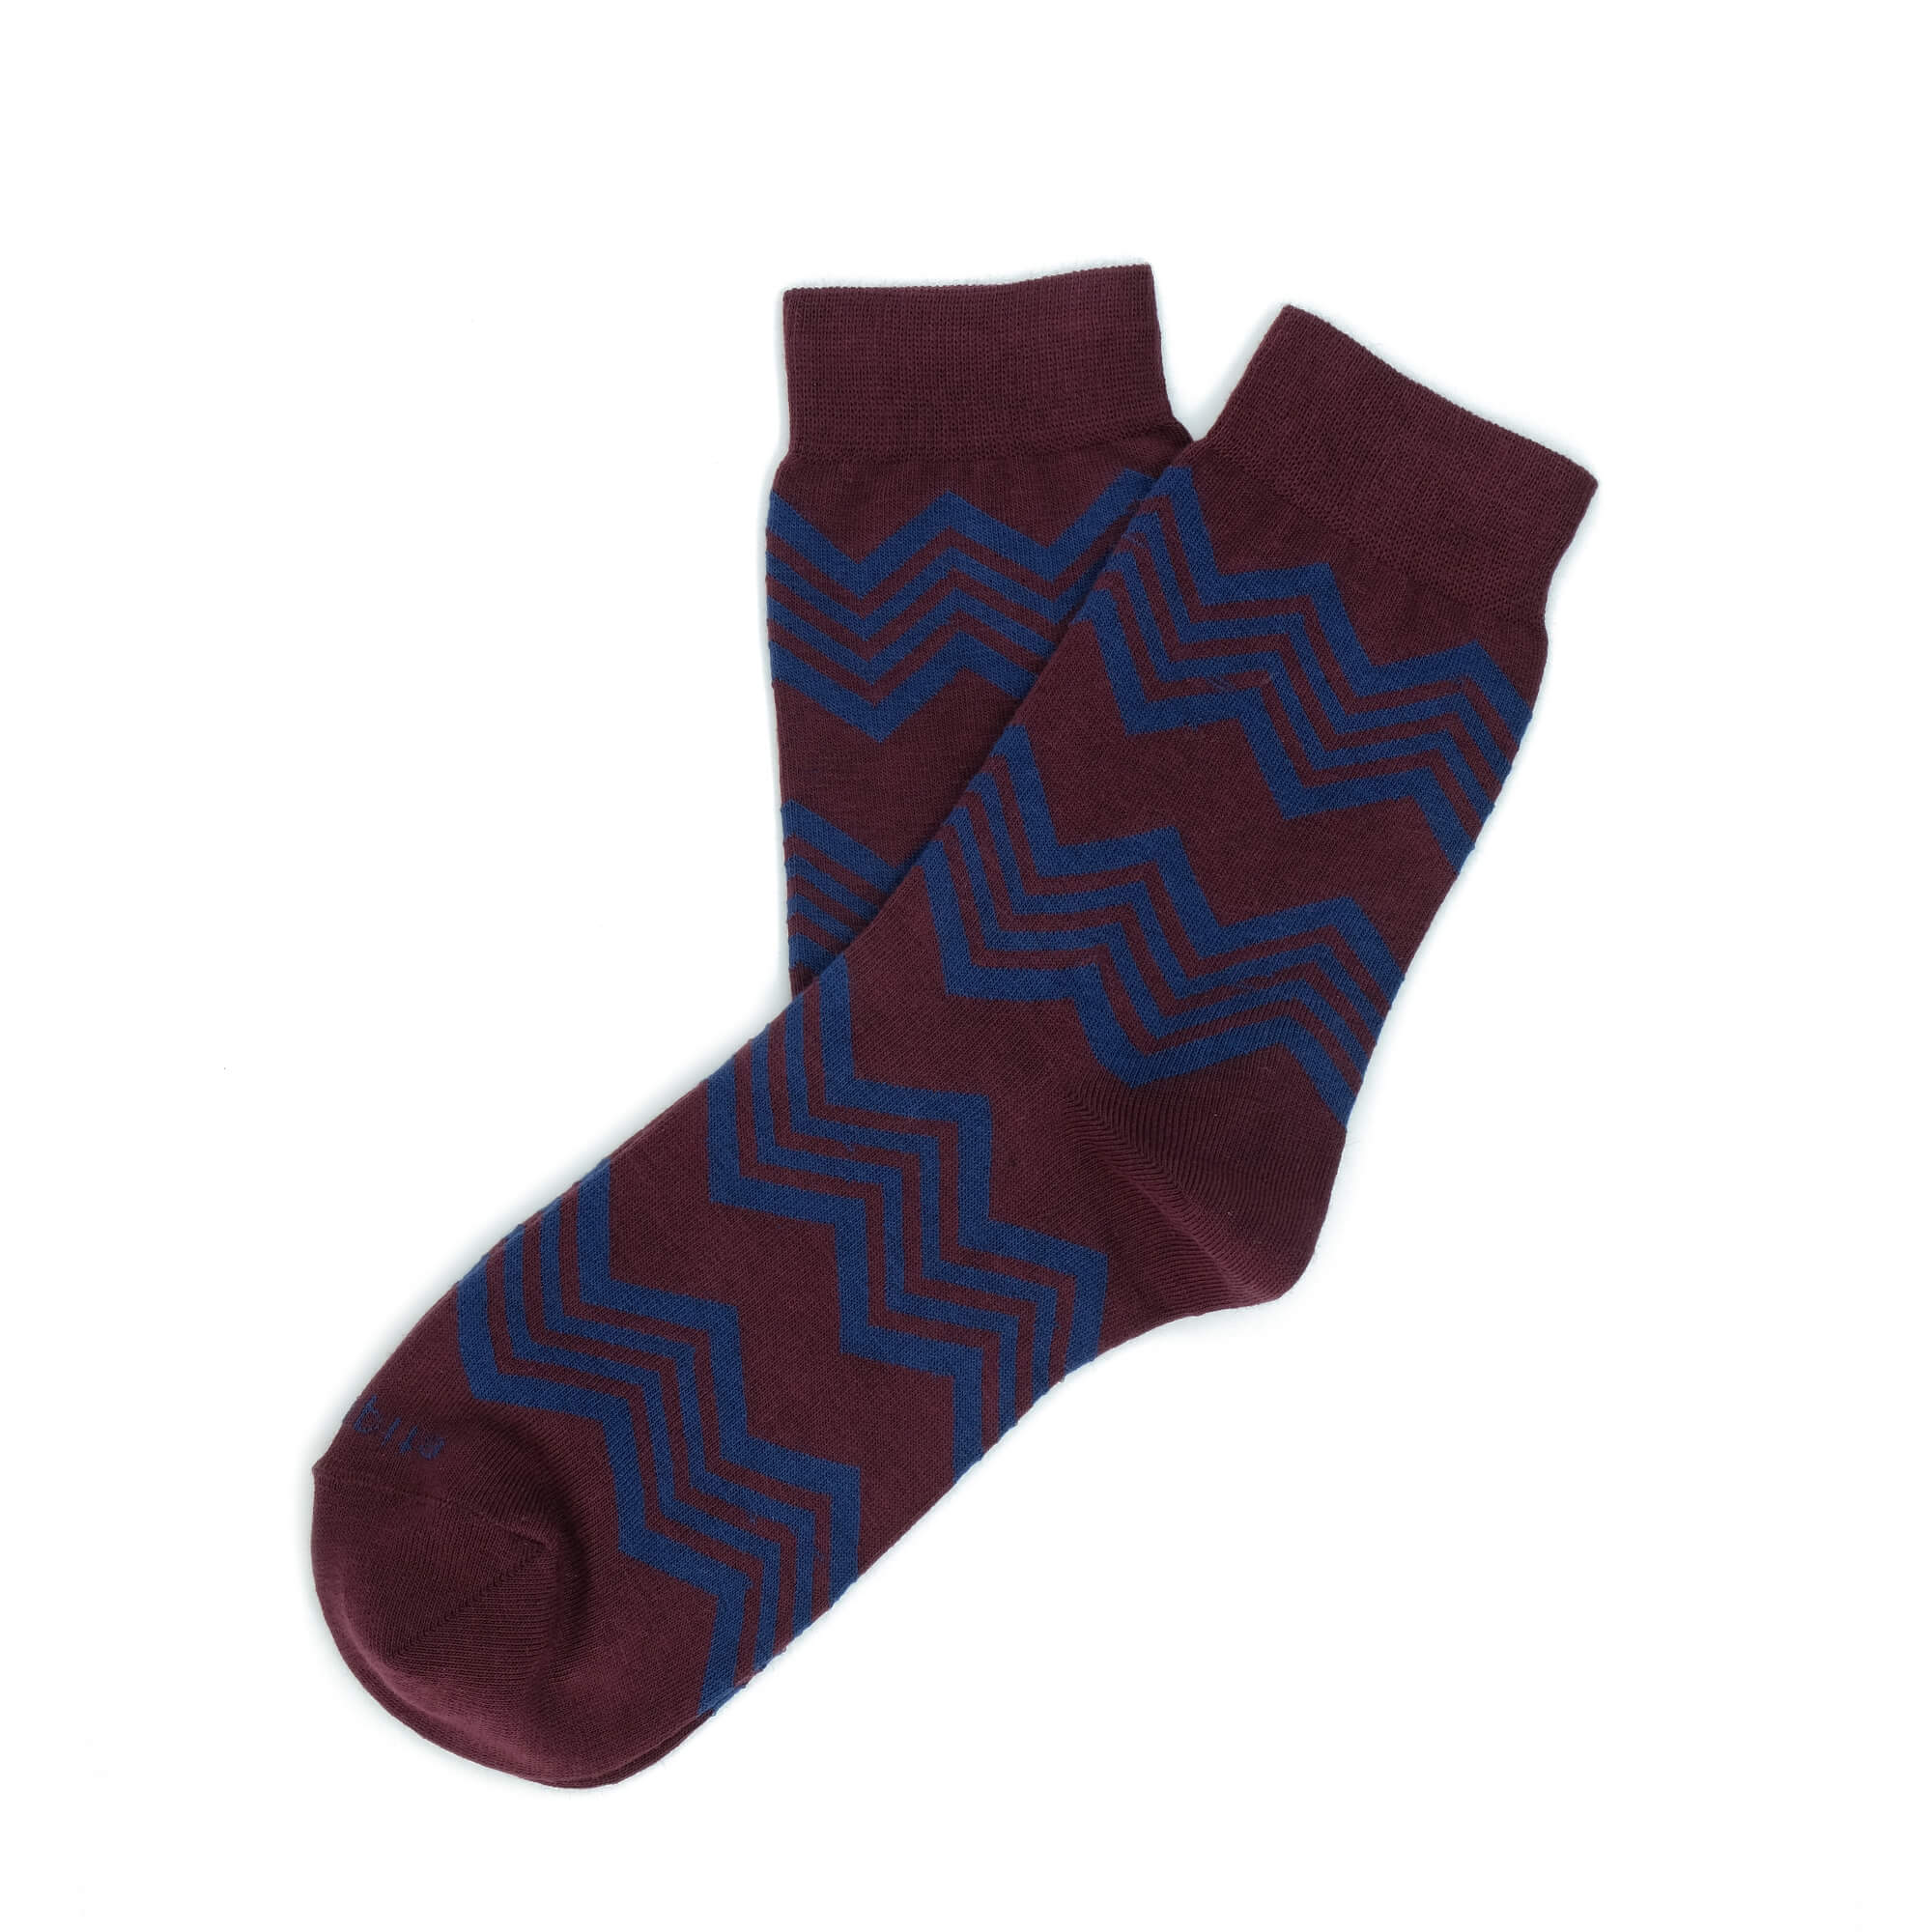 Womens Socks - Alpine Stripes Women's Socks - Bordeaux⎪Etiquette Clothiers